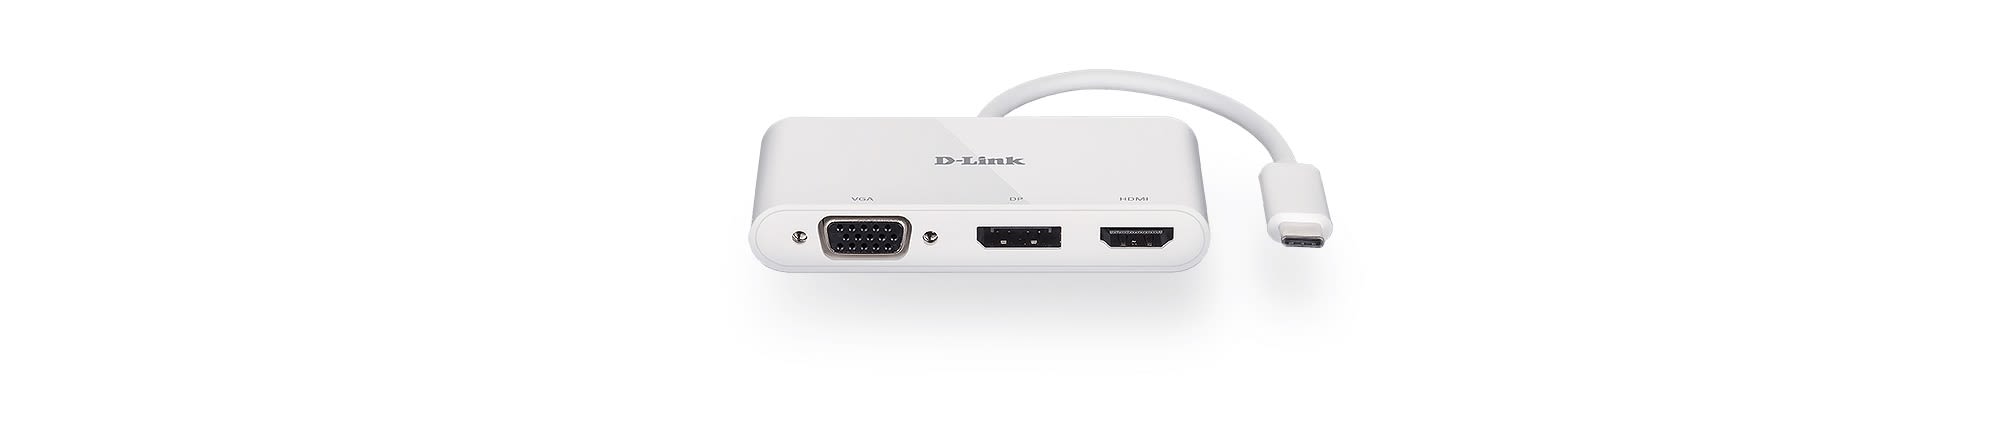 D-Link Triple Monitor 1080 USB-C Docking Station with HDMI, VGA - 1 x USB ports, USB C